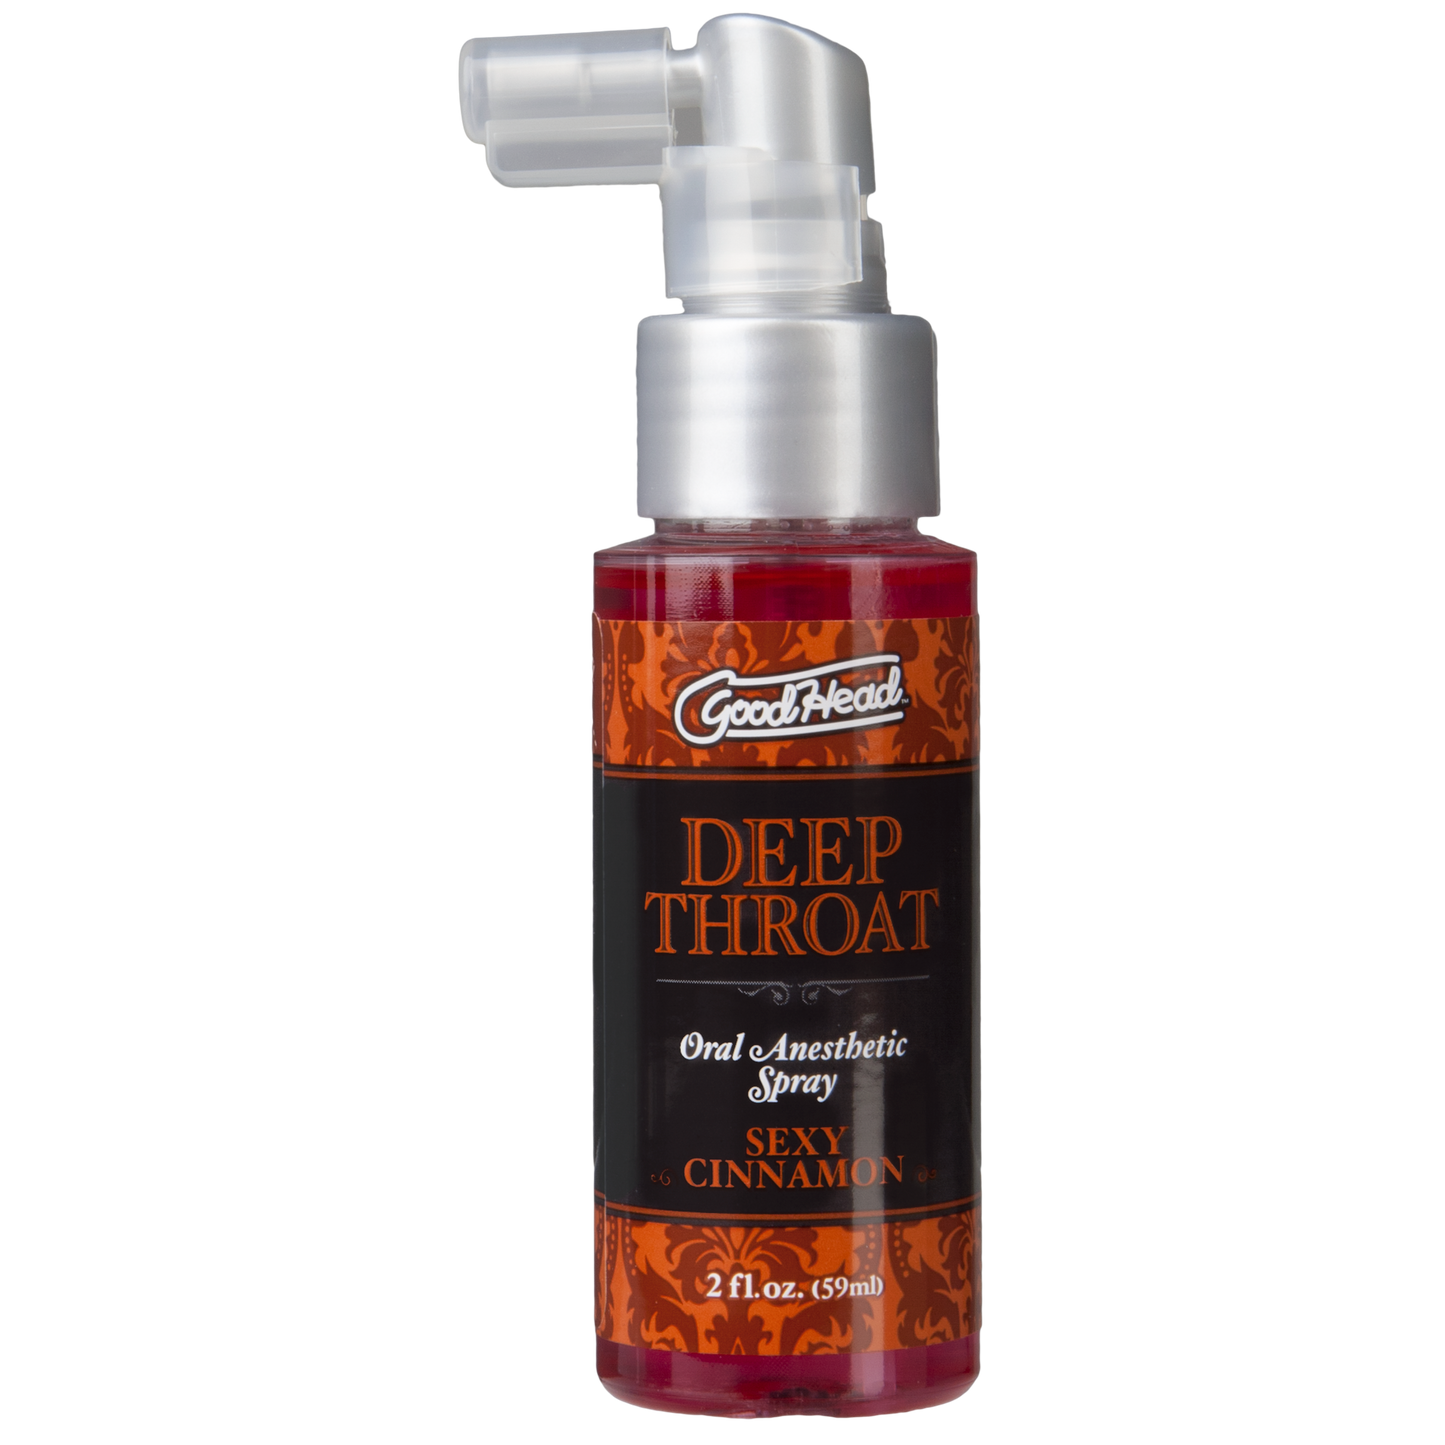 Deep Throat Oral Anesthetic Spray 2oz (cinnamon).